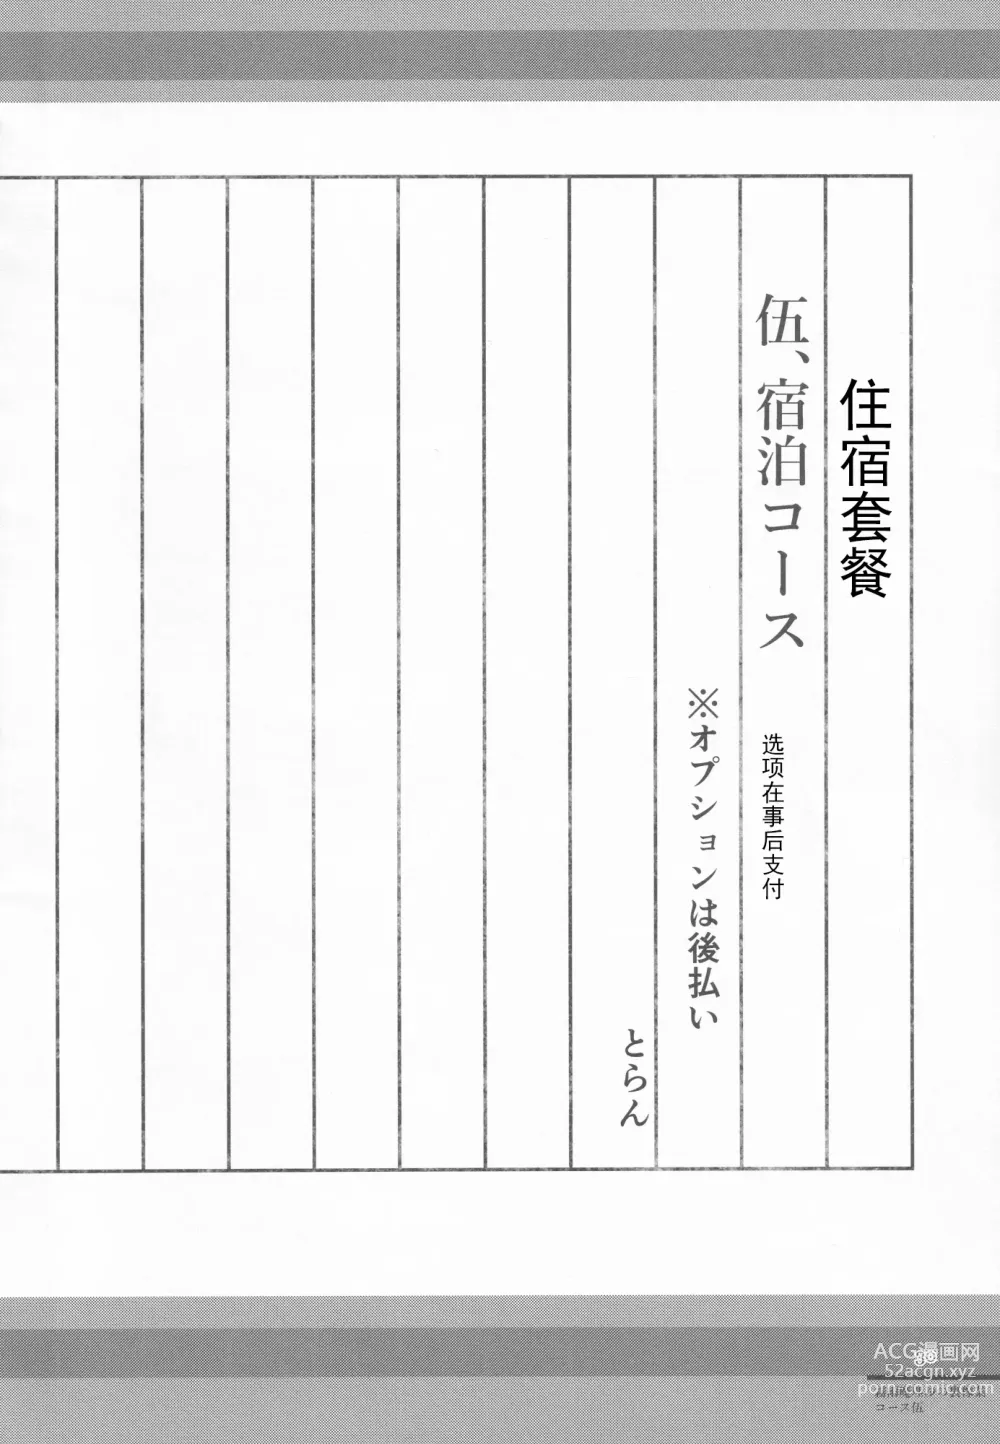 Page 29 of doujinshi Kirisame Mahouten Ura Course Goudou Kirisame Marisa no Ura Kagyou